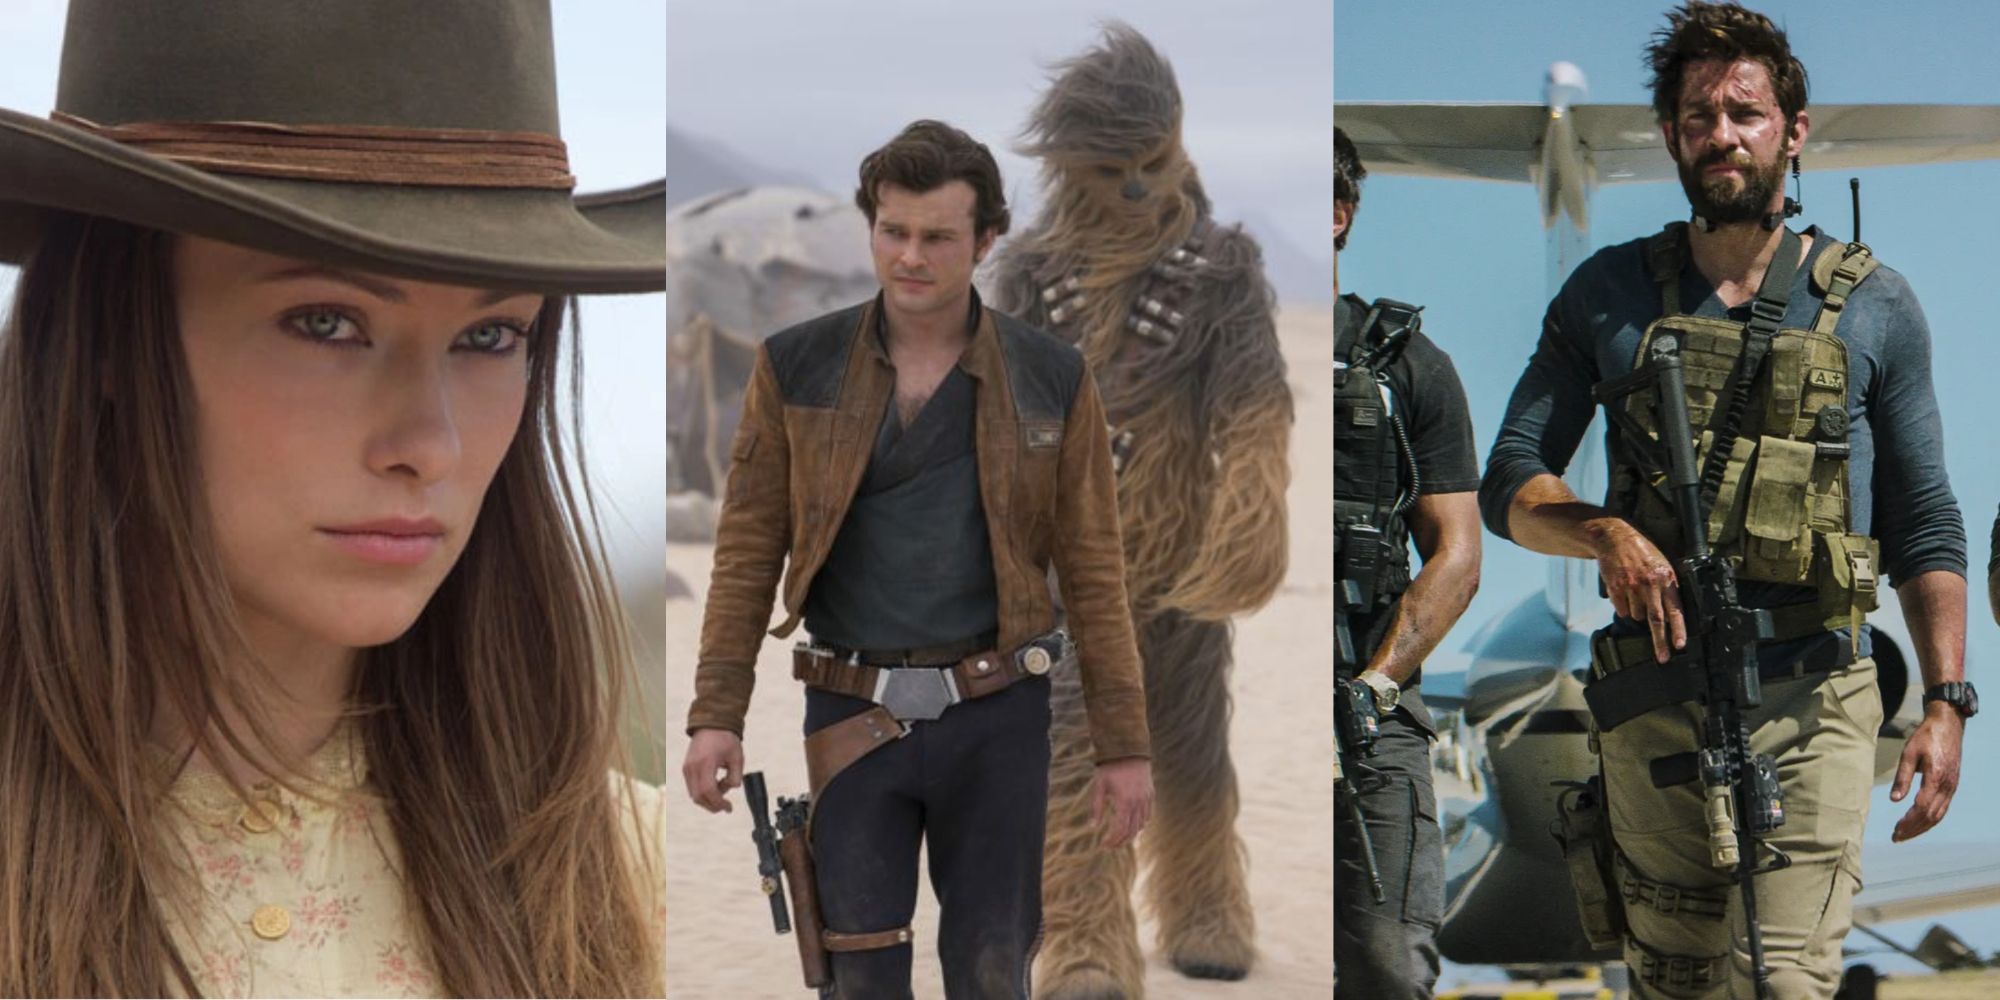 John Krasinski in 13 Hours, Olivia Wilde in Aliens and Cowboys, and Chewbacca in Solo